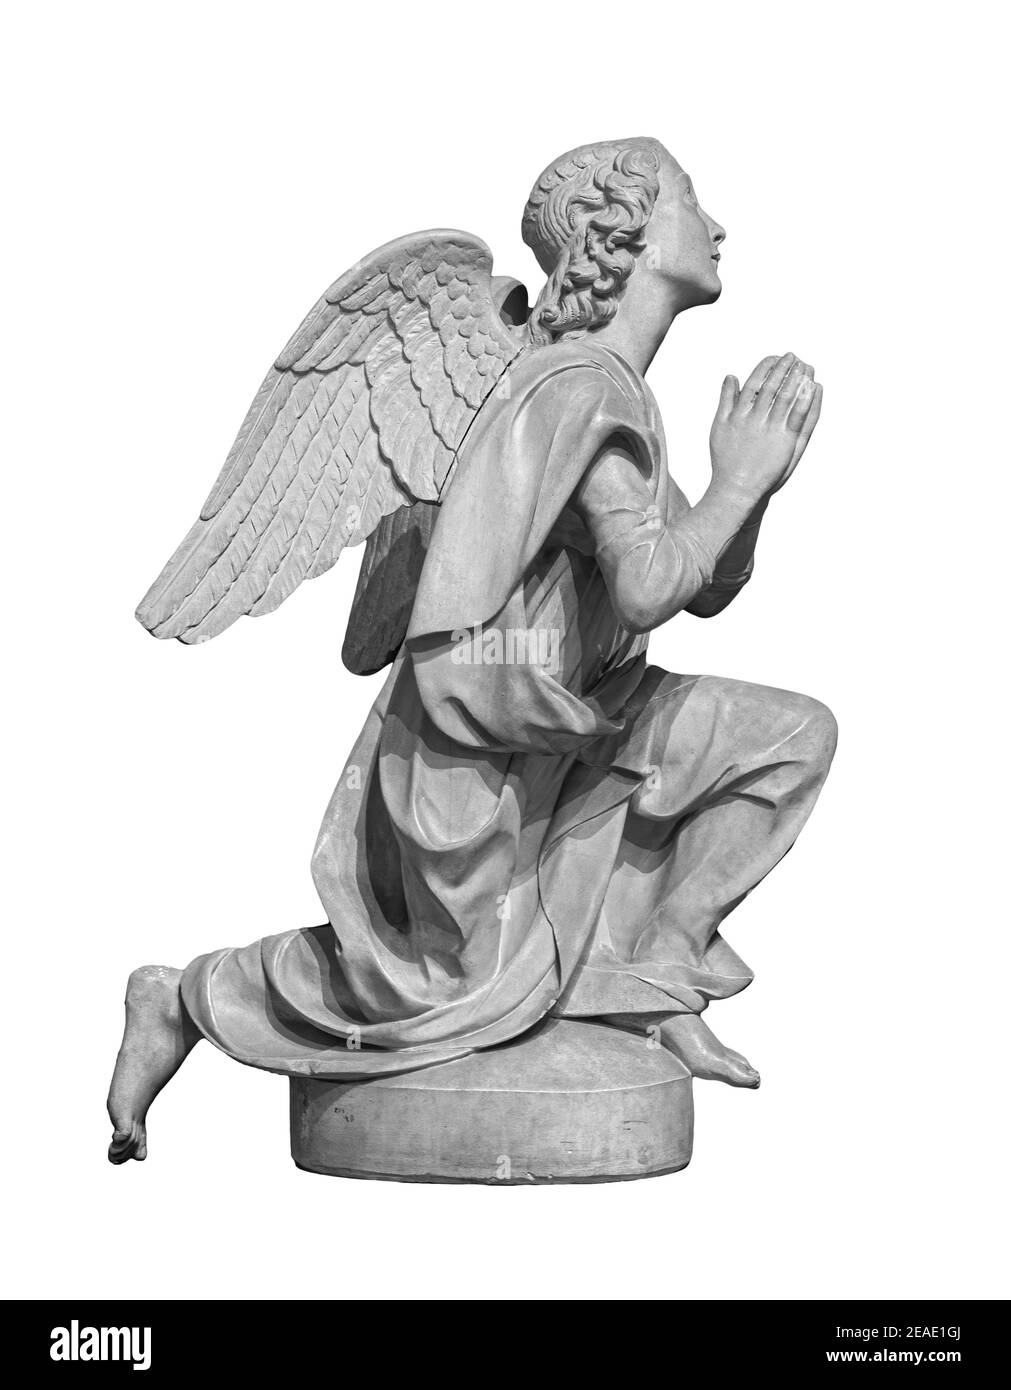 Angel statue isolated on white background. White stone sculpture of praying cherub Stock Photo